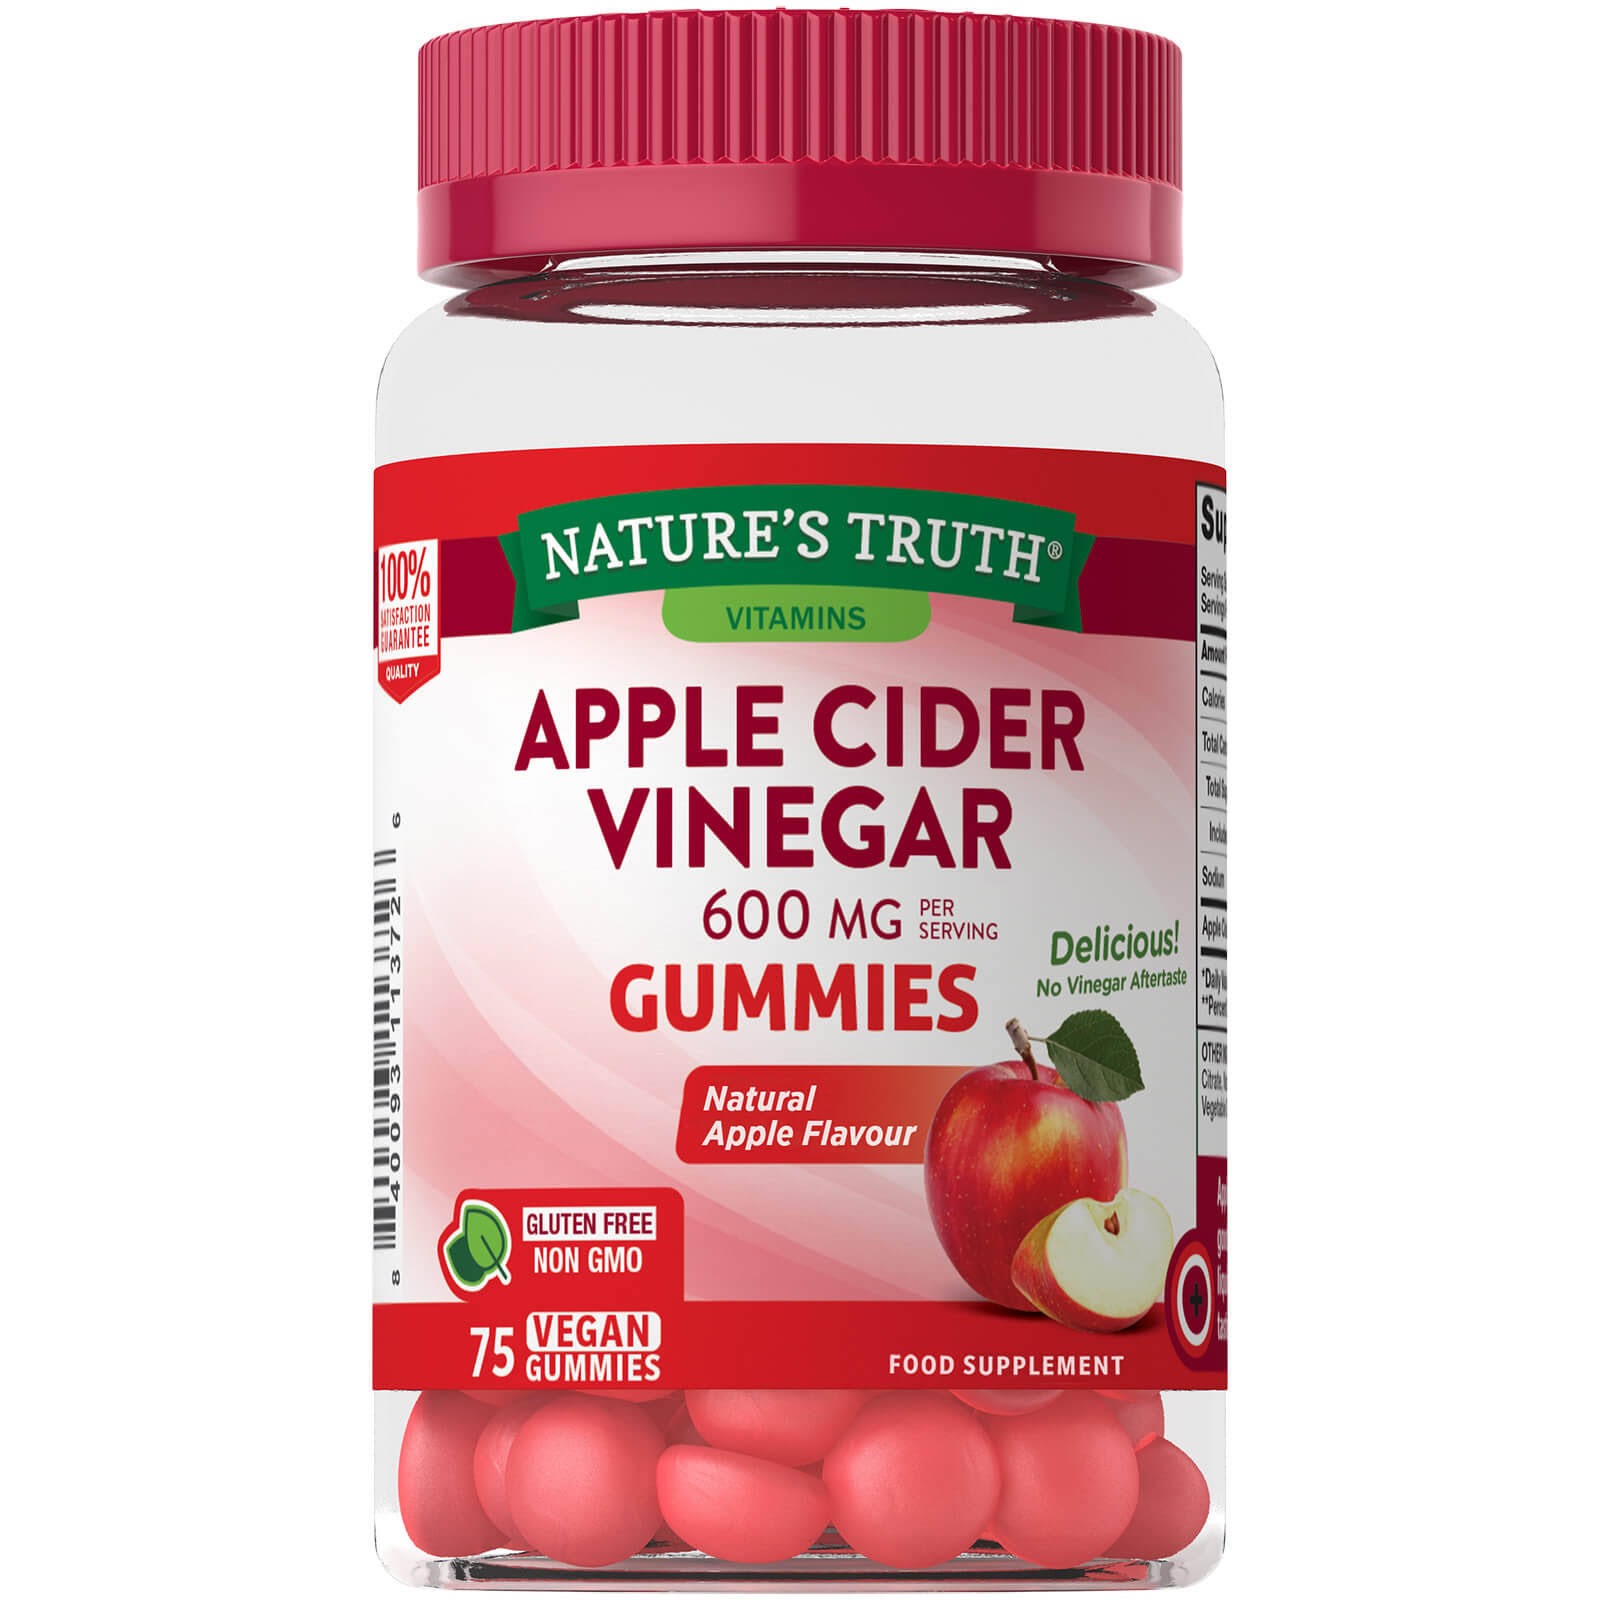 Nature's Truth Apple Cider Vinegar 600mg Vegan Gummies, 75 Count